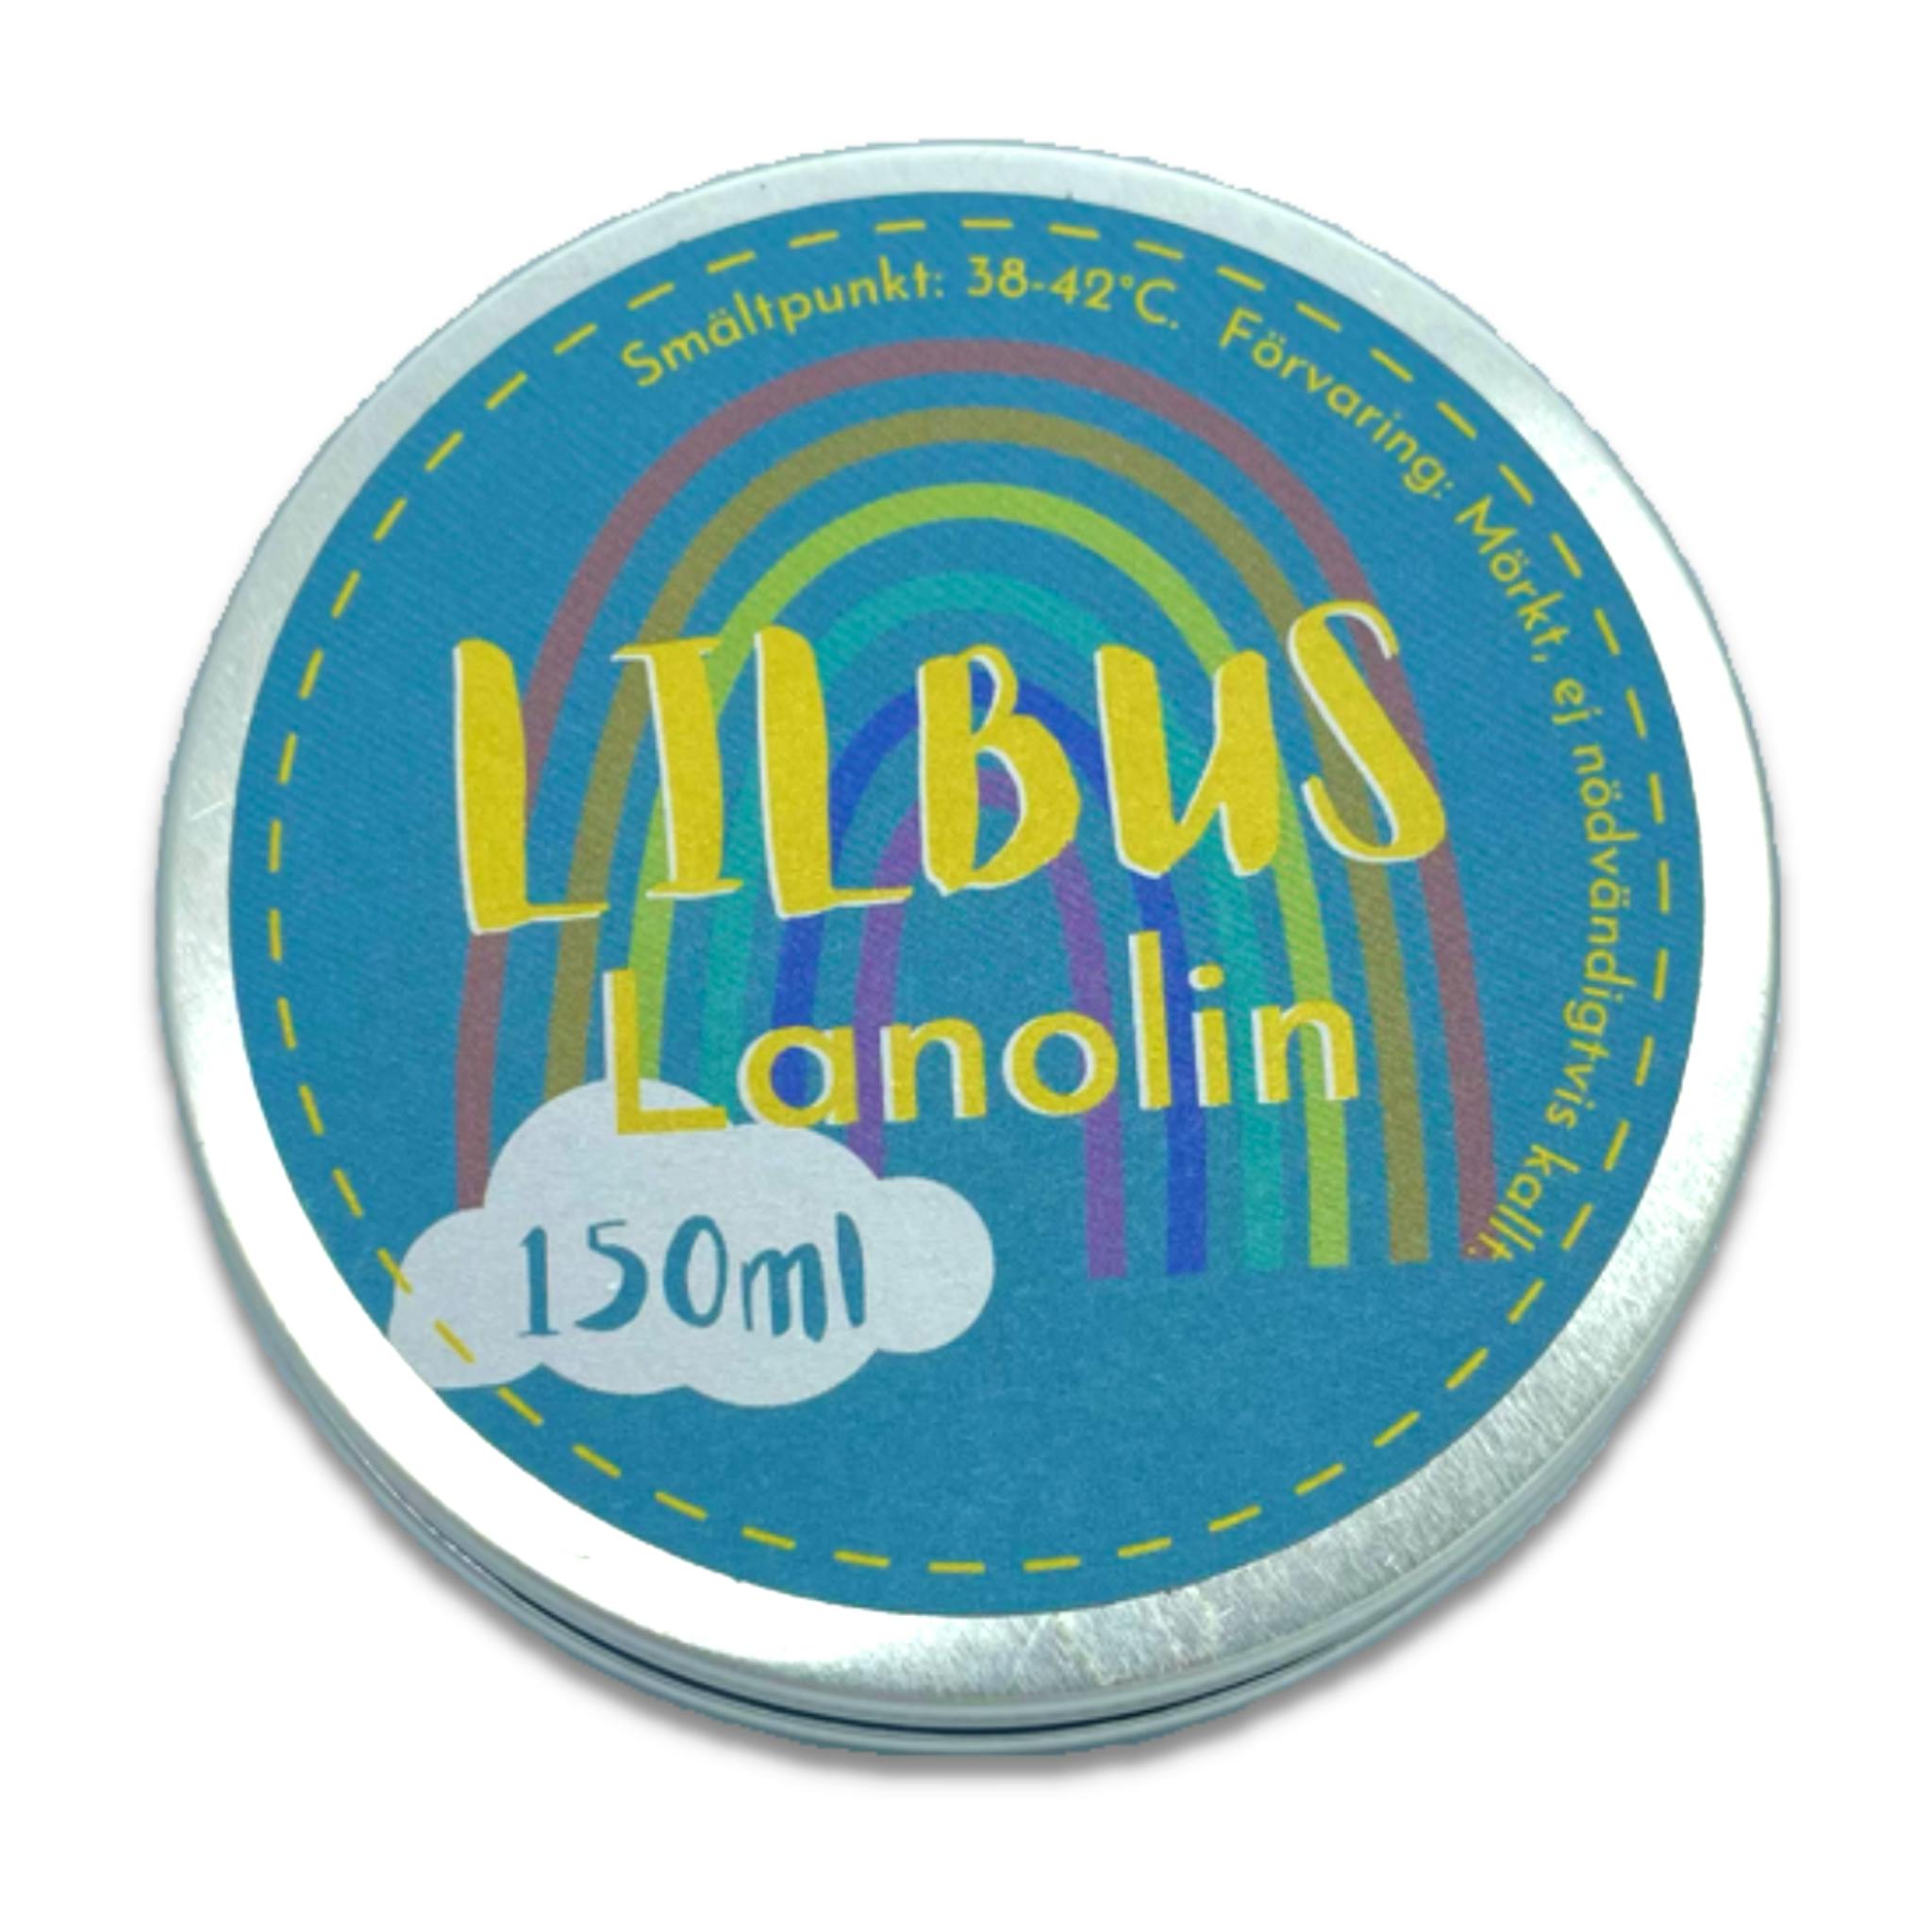 Lilbus Lanolin 150ml